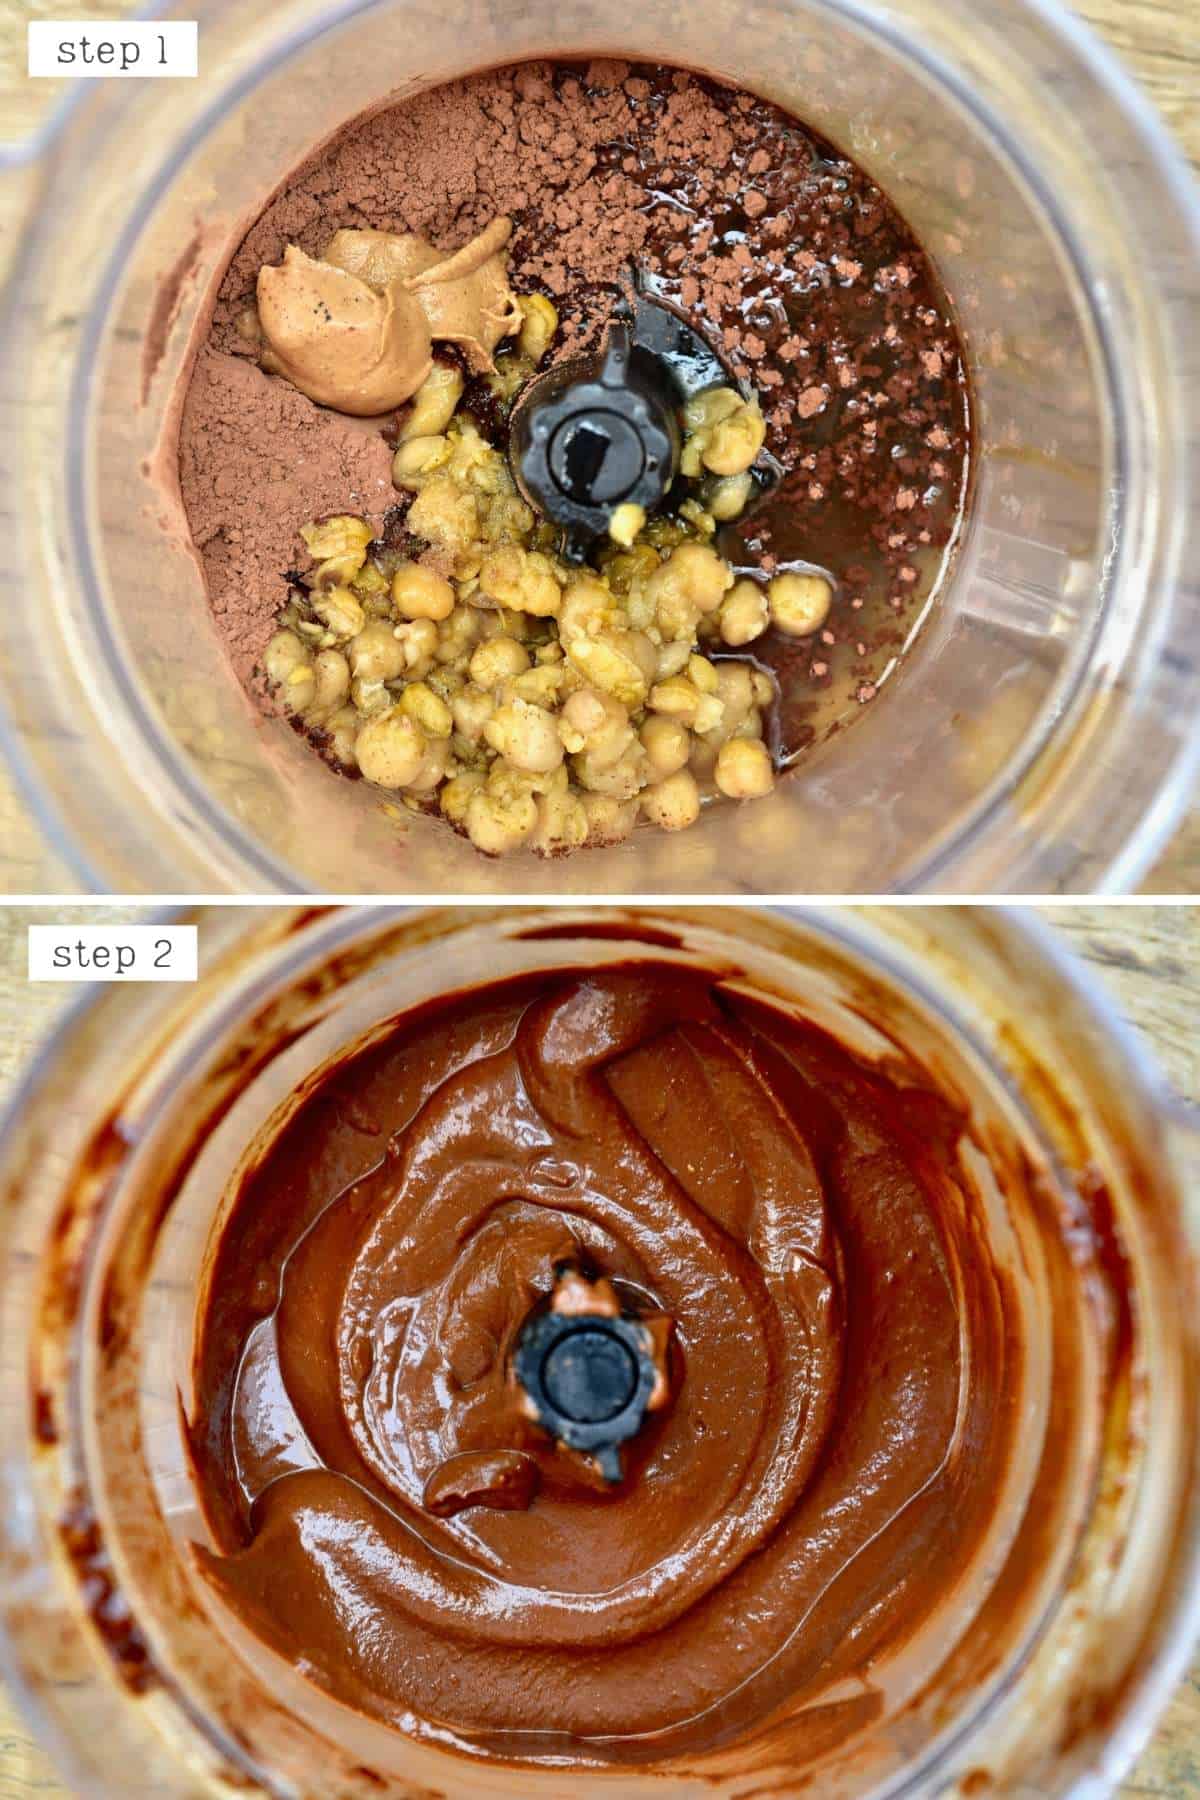 Steps for making chocolate hummus